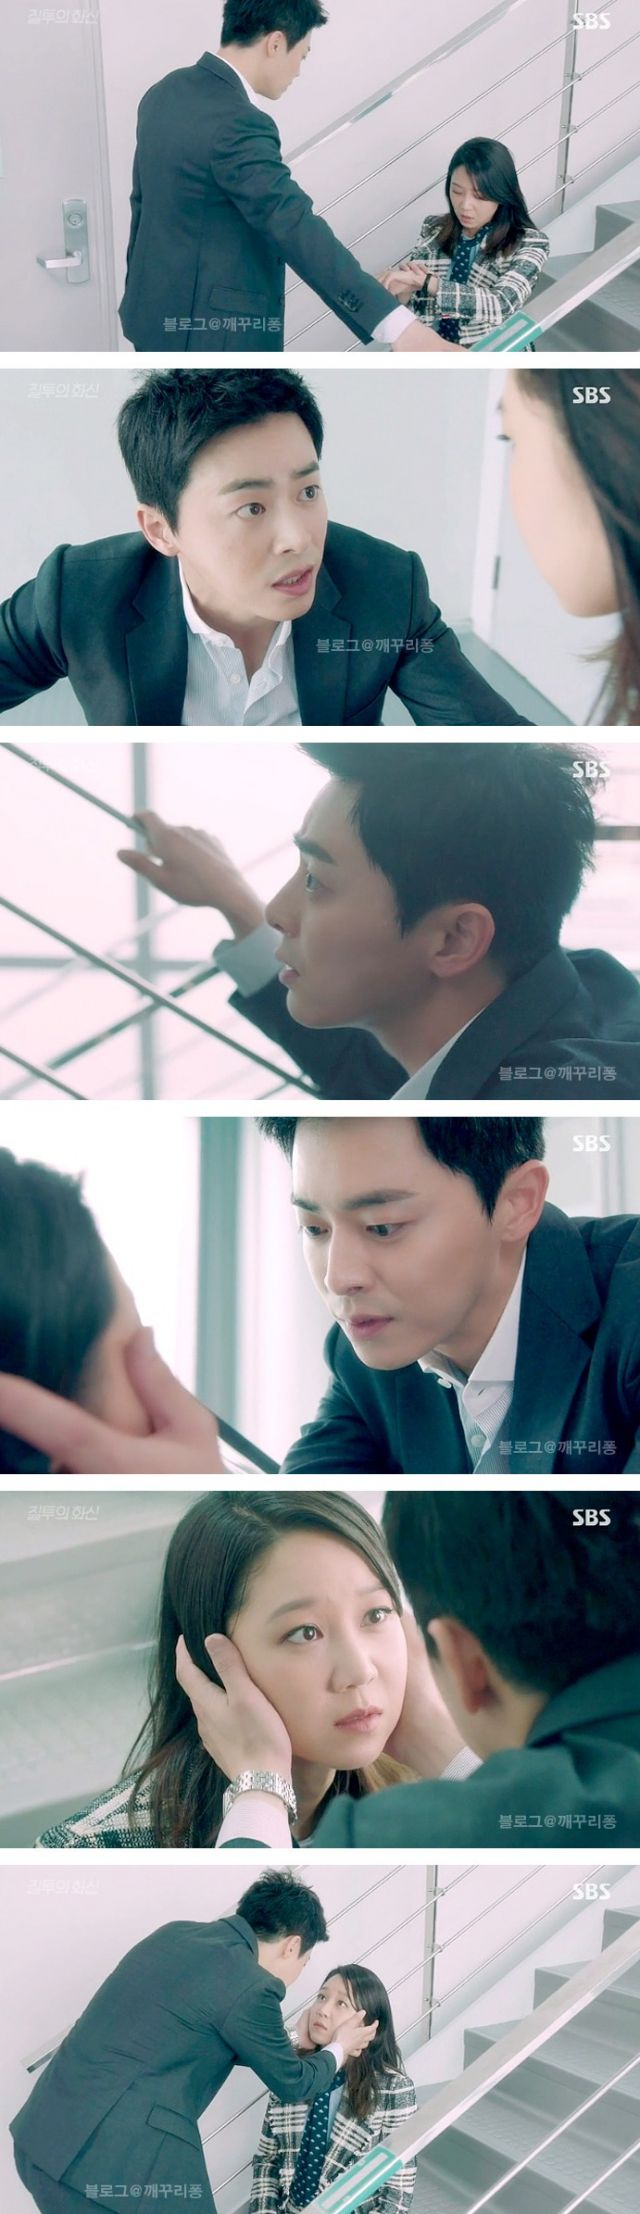 episode 14 captures for the Korean drama 'Incarnation of Jealousy'